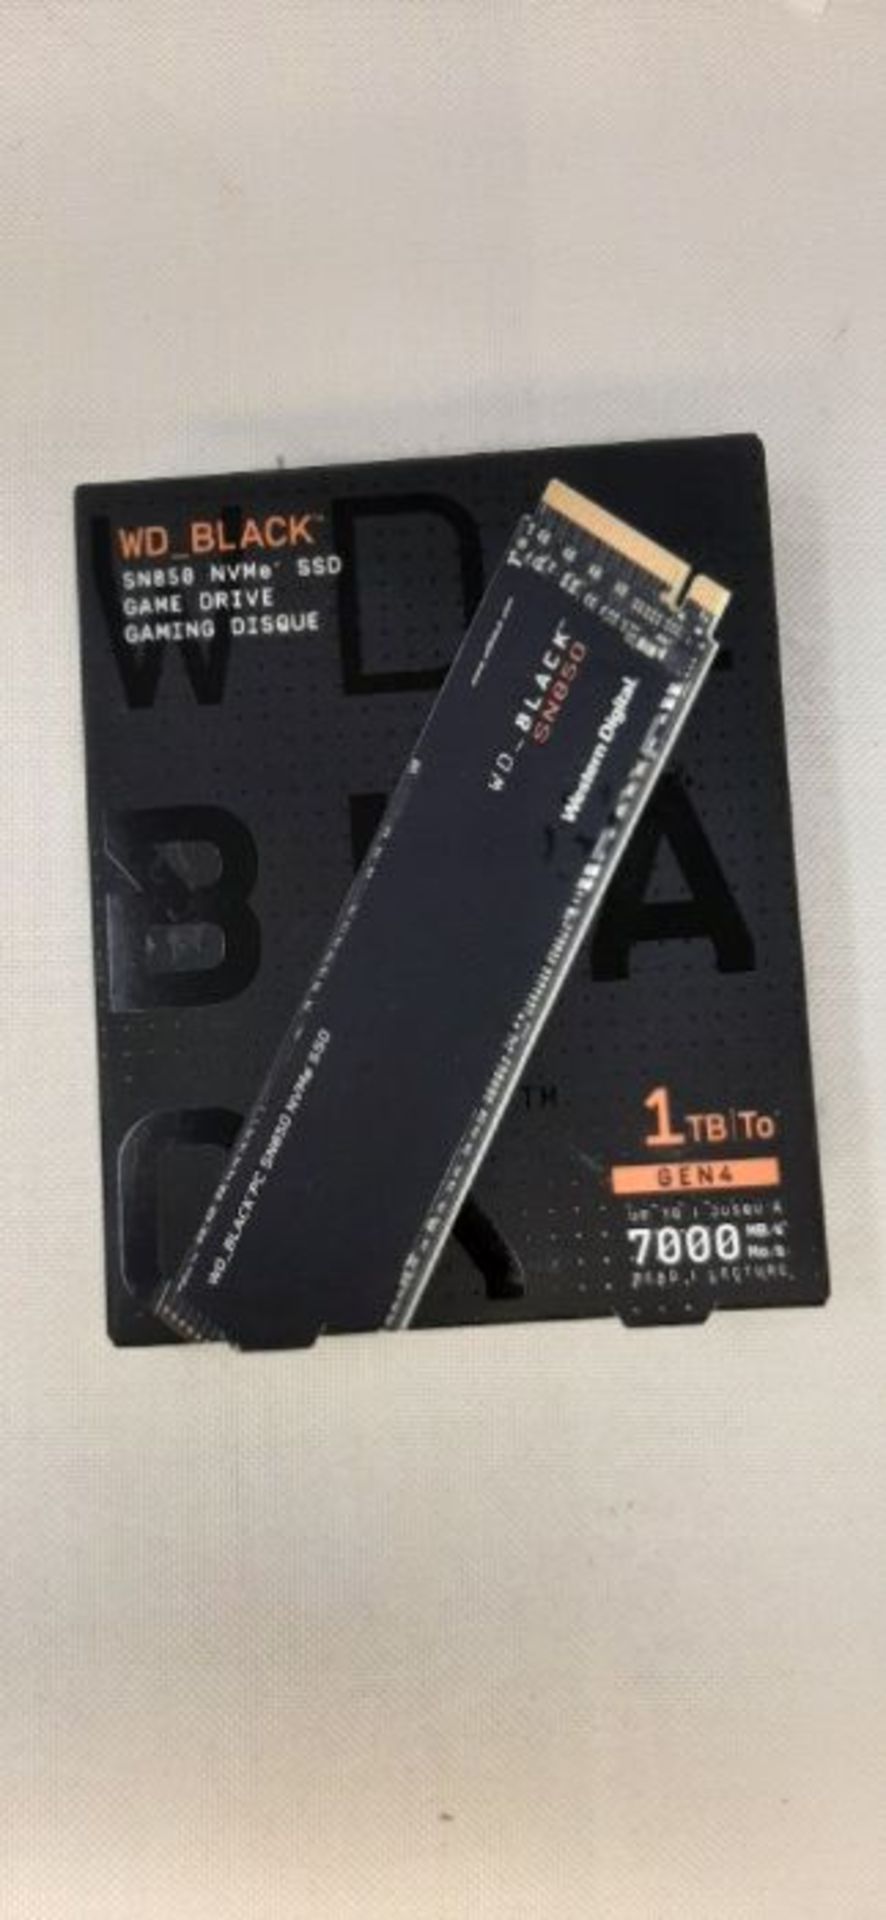 RRP £168.00 W�D�_�B�L�A�C�K� �S�N�8�5�0� �1�T�B� �N�V�M�e� �I�n�t�e�r�n�a�l� �G�a�m�i�n�g� �S�S�D�;� - Image 2 of 3